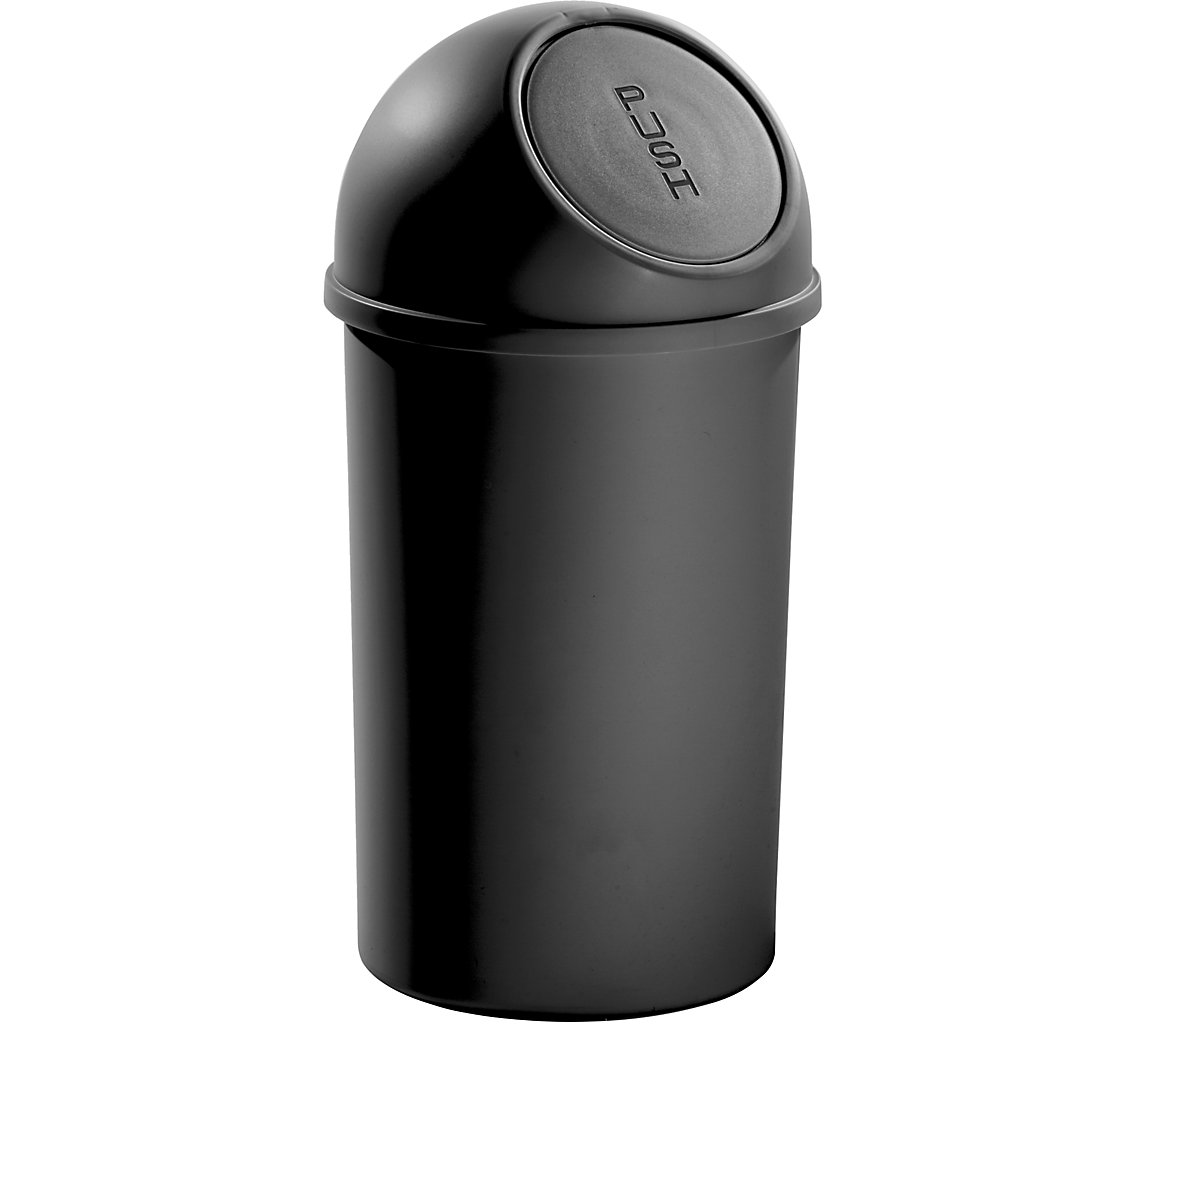 Push top waste bin made of plastic – helit